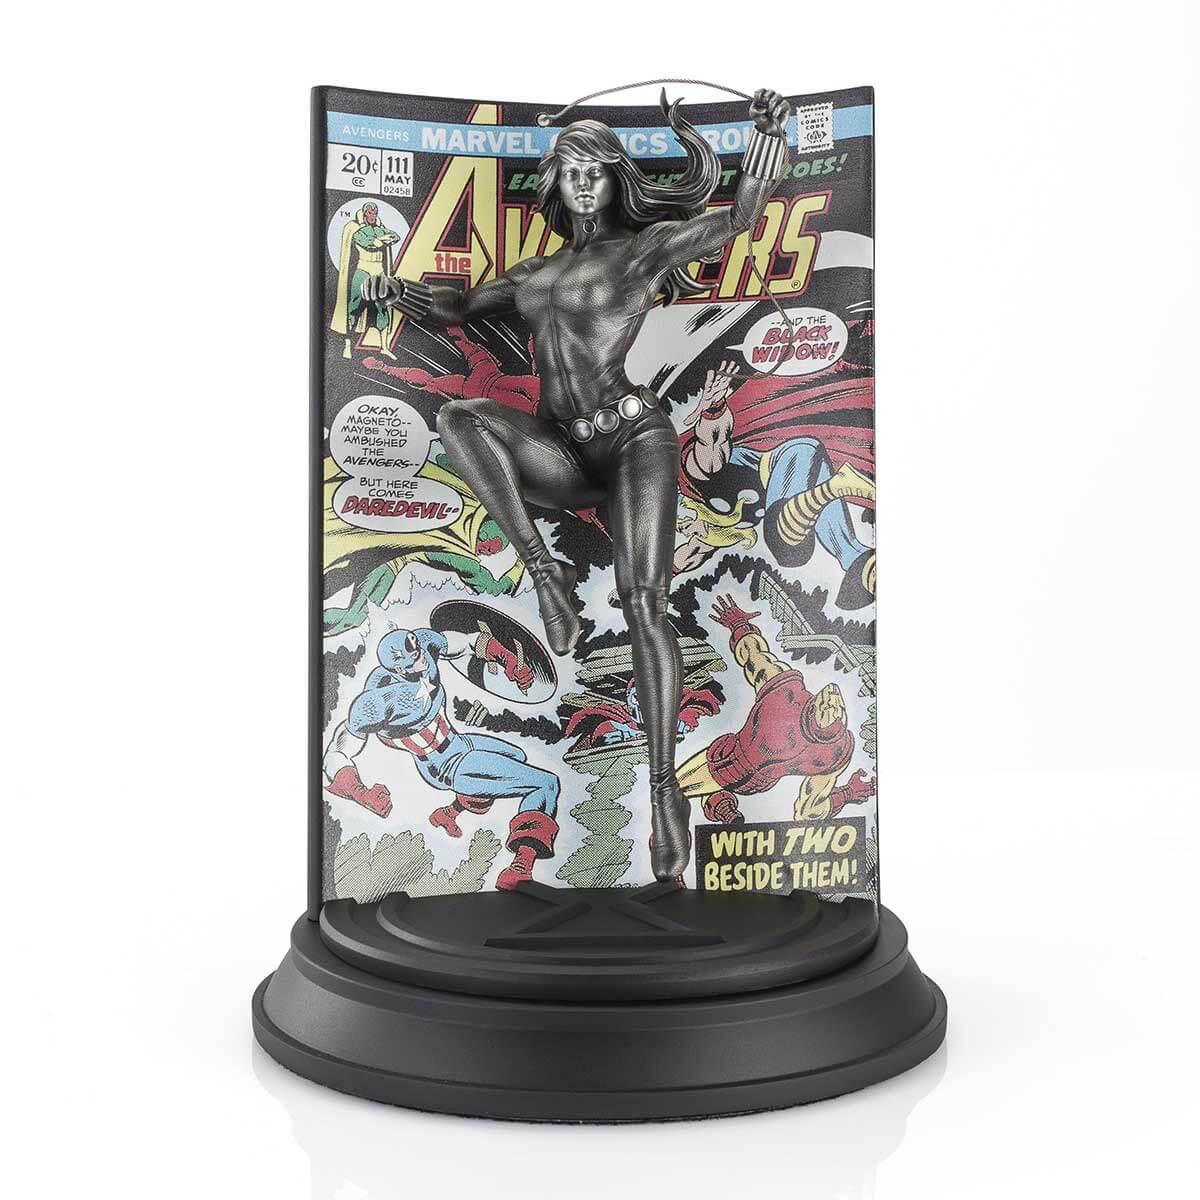 Black Widow Avengers Volume 1 #111 Limited Edition Figurine - Marvel Statue